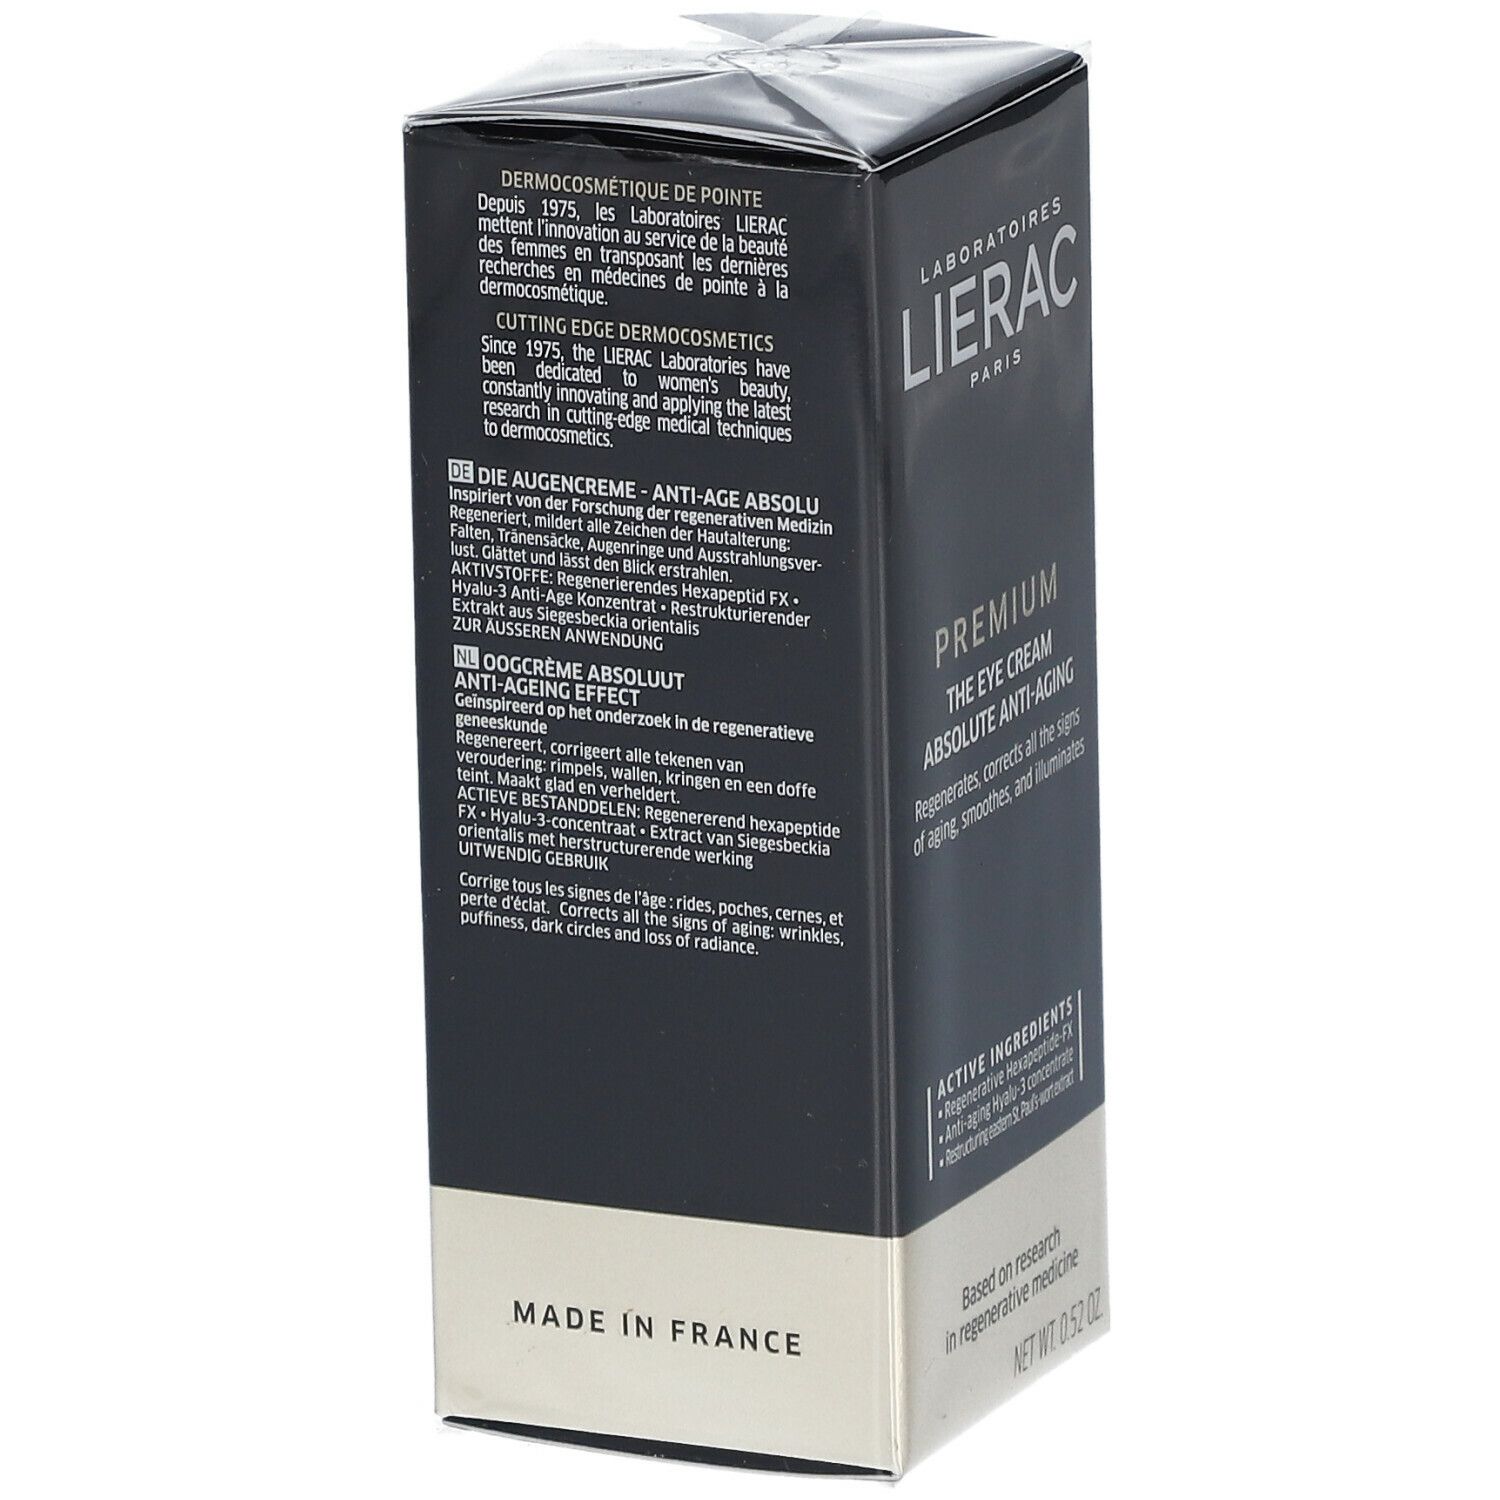 Lierac Premium Yeux